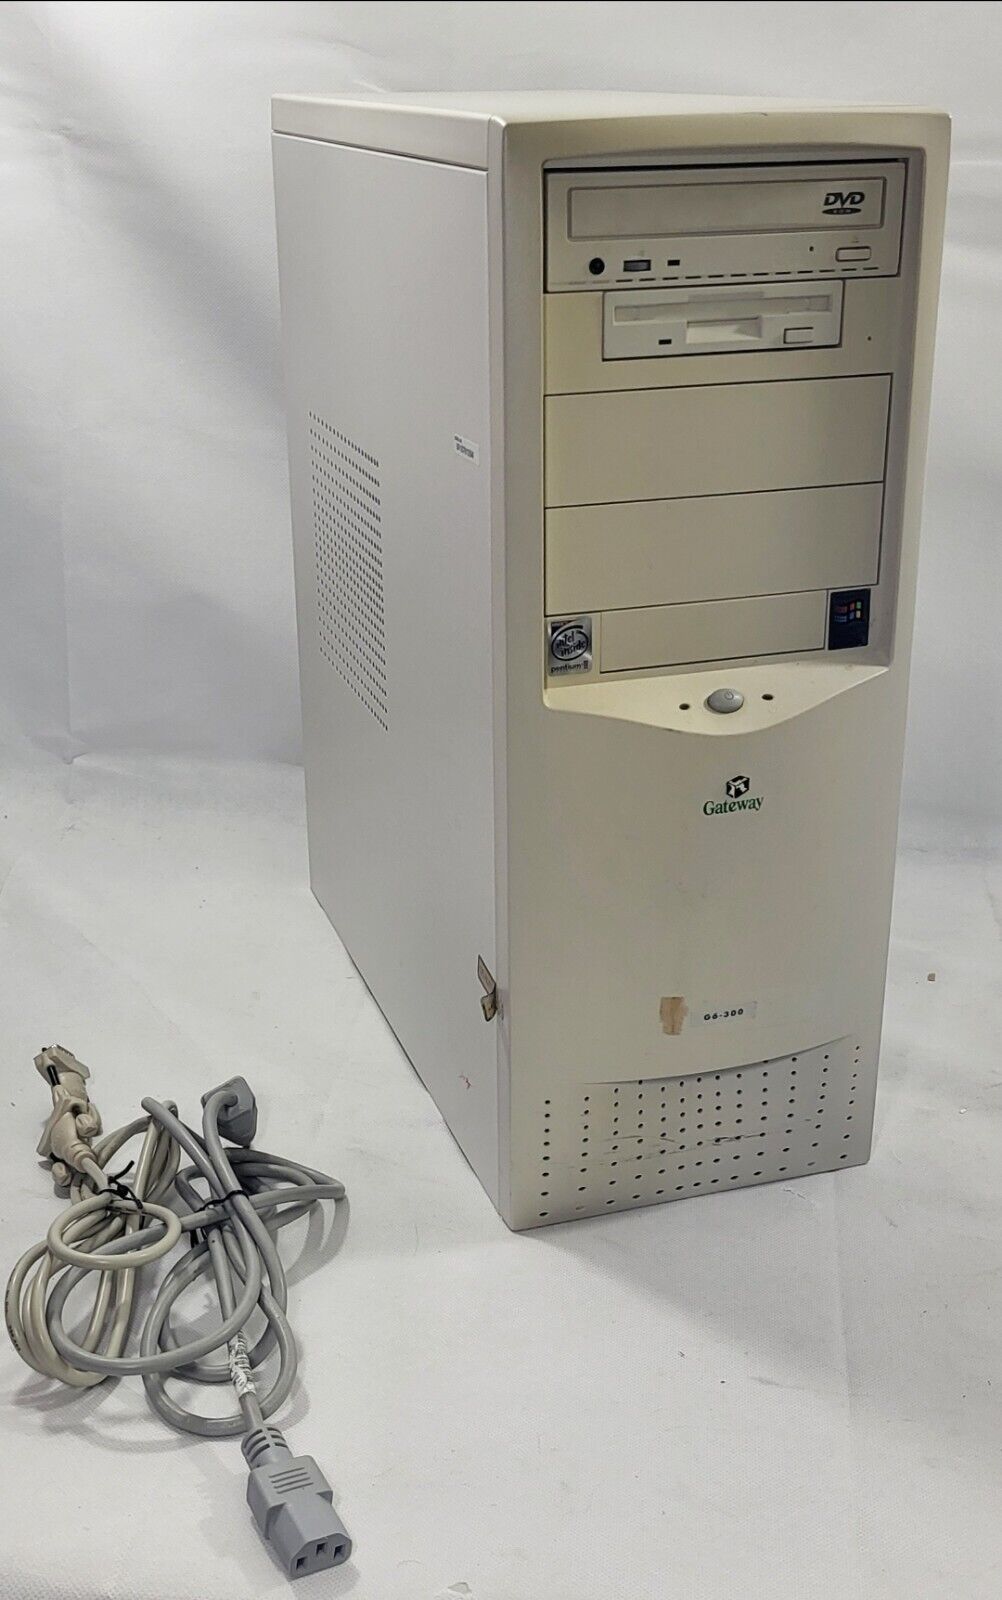 VTG 1998 Gateway G6-300 Intel Pentium II, Floppy Disc+CD Drives & Original Cords